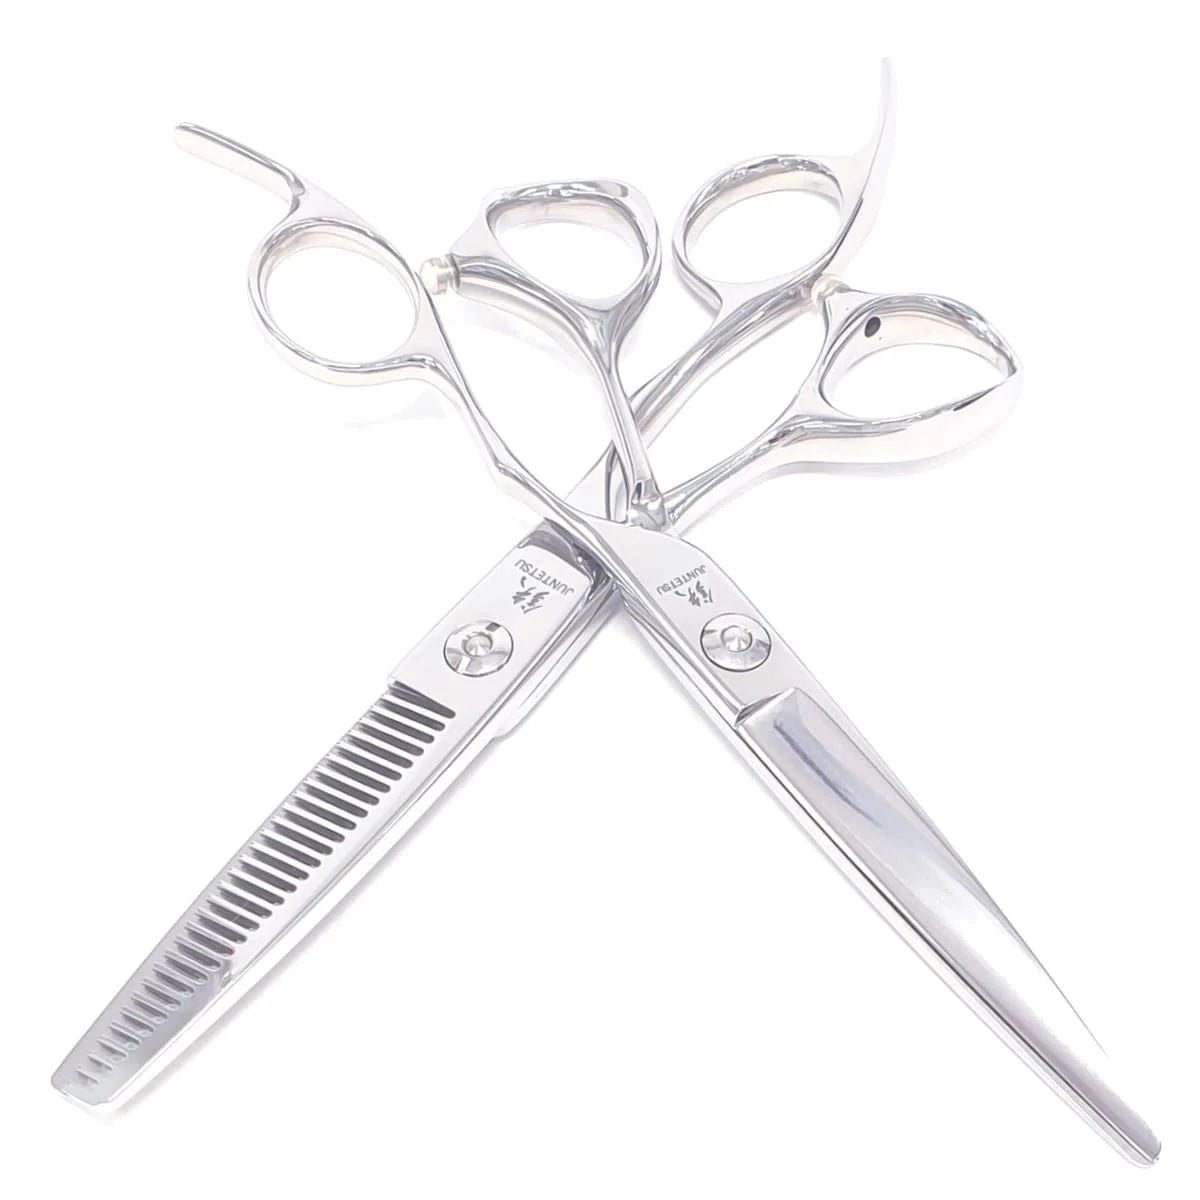 Juntetsu Offset Hairdressing Scissor Set - Japan Scissors